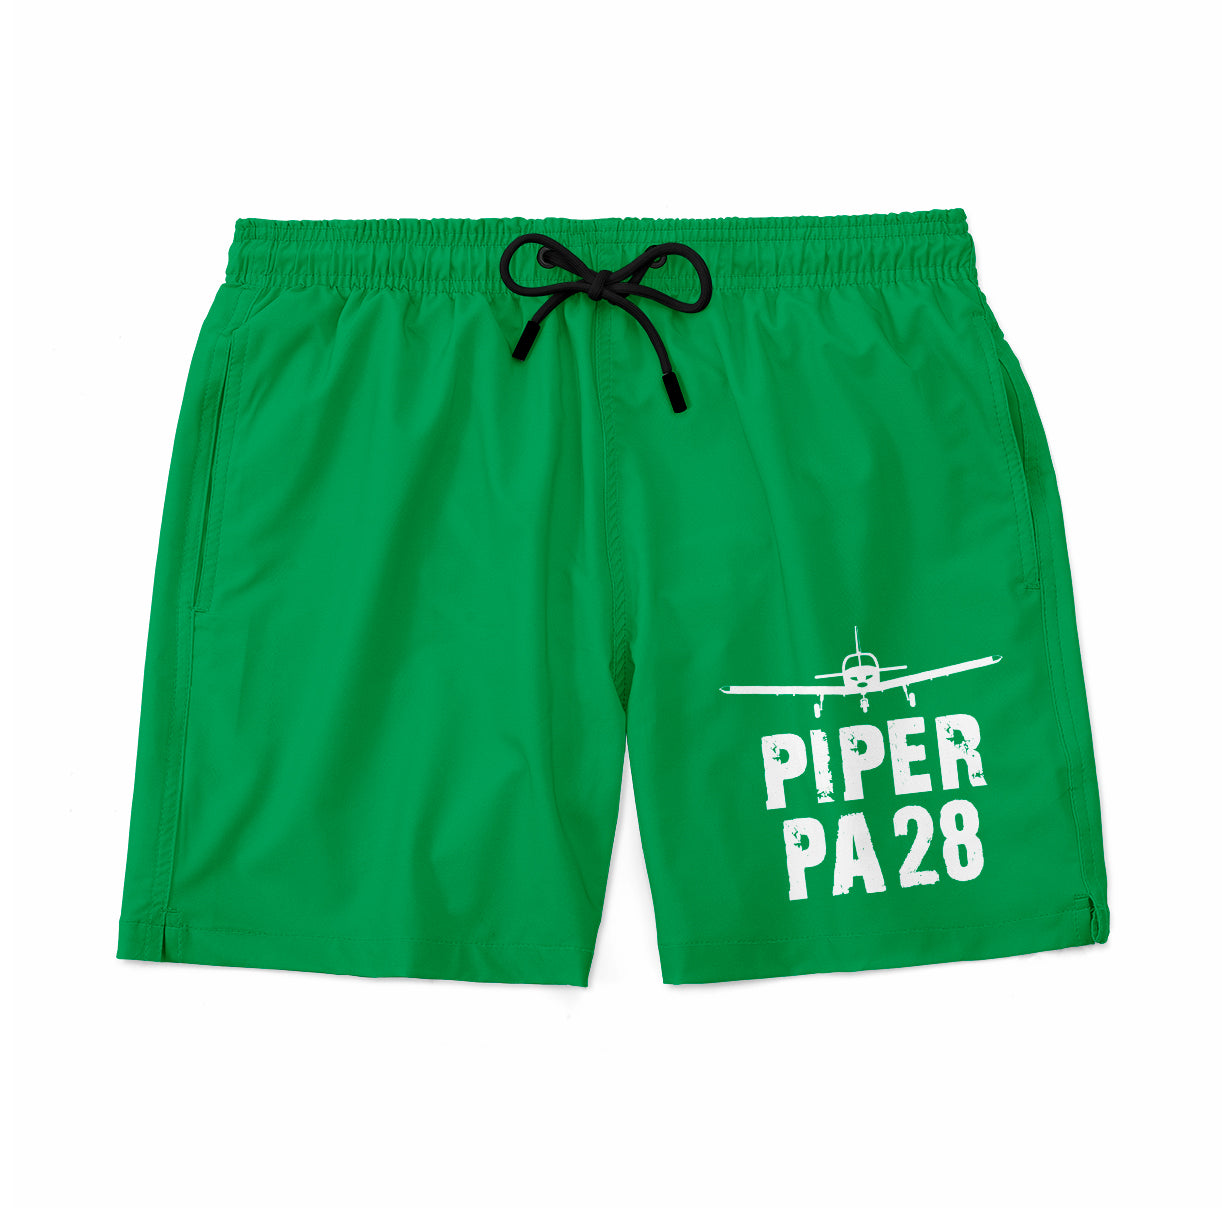 Piper PA28 & Plane Designed Swim Trunks & Shorts